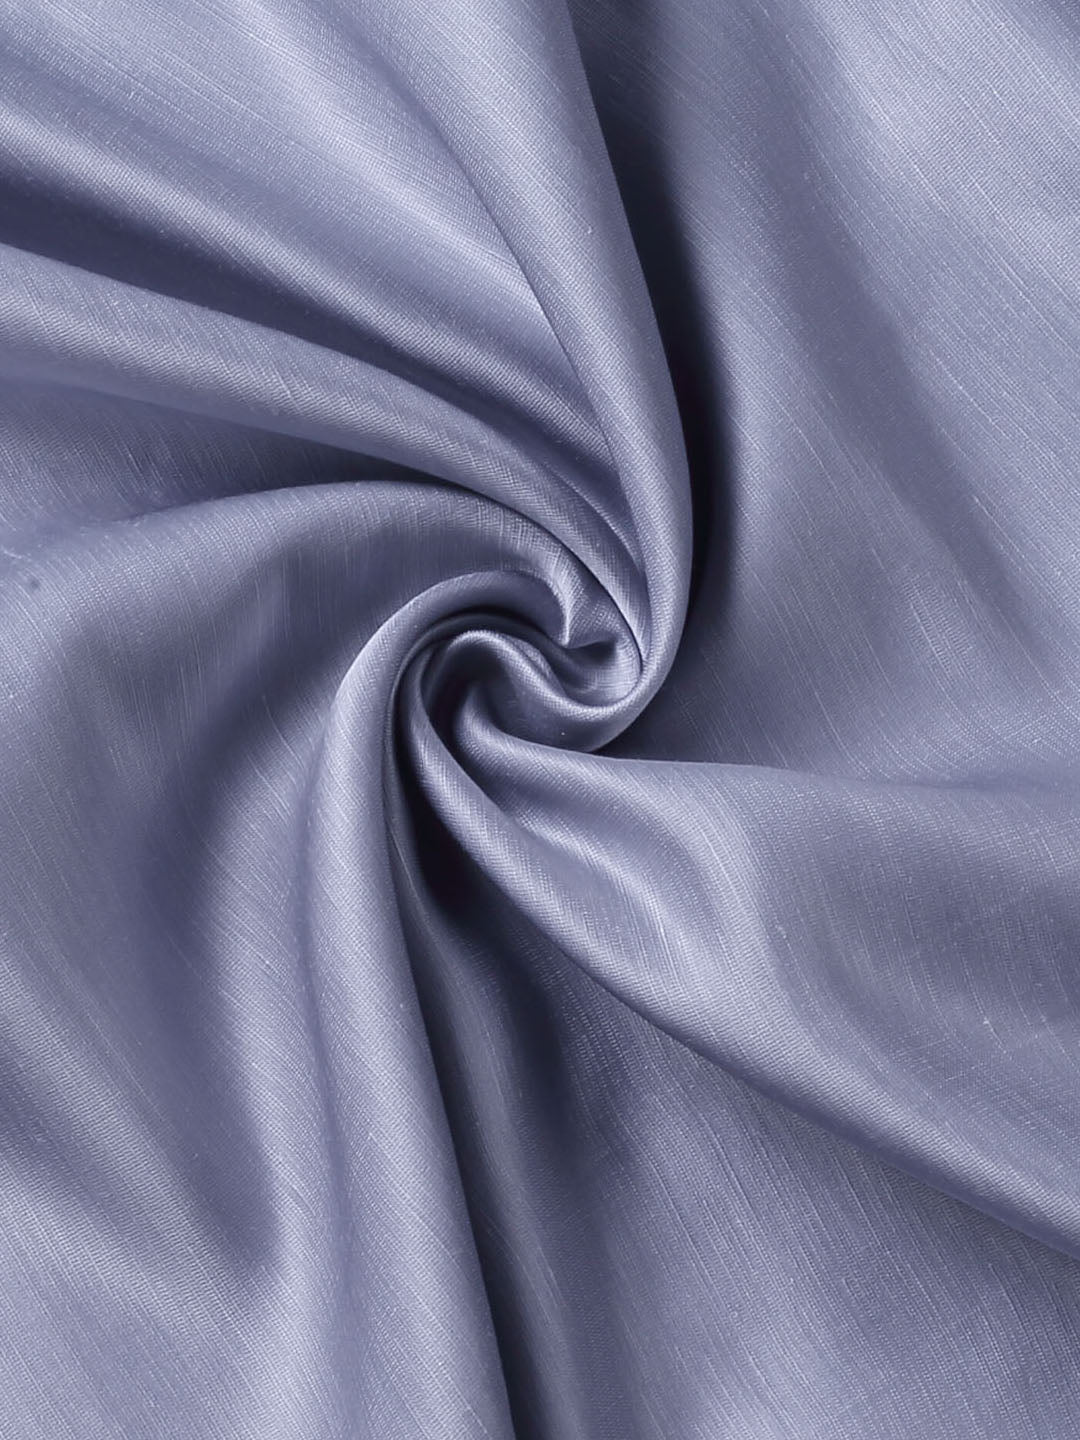 Bluish Grey Linen Satin Fabric